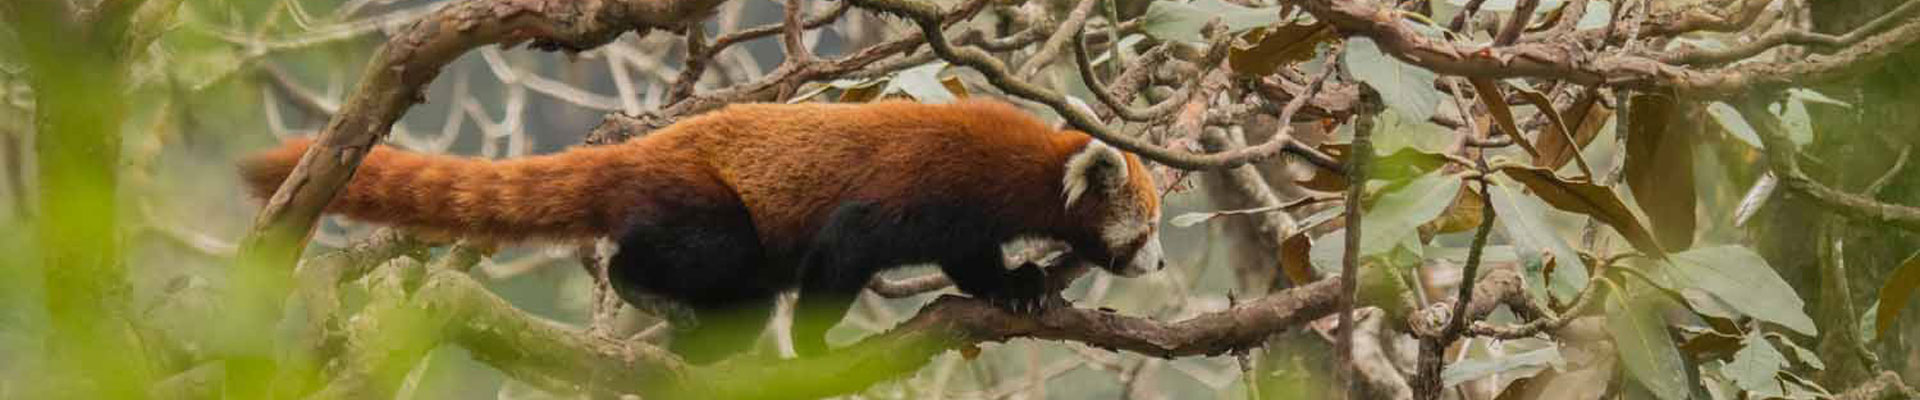 Red Panda by Paul McDougall Wildlife Photographer